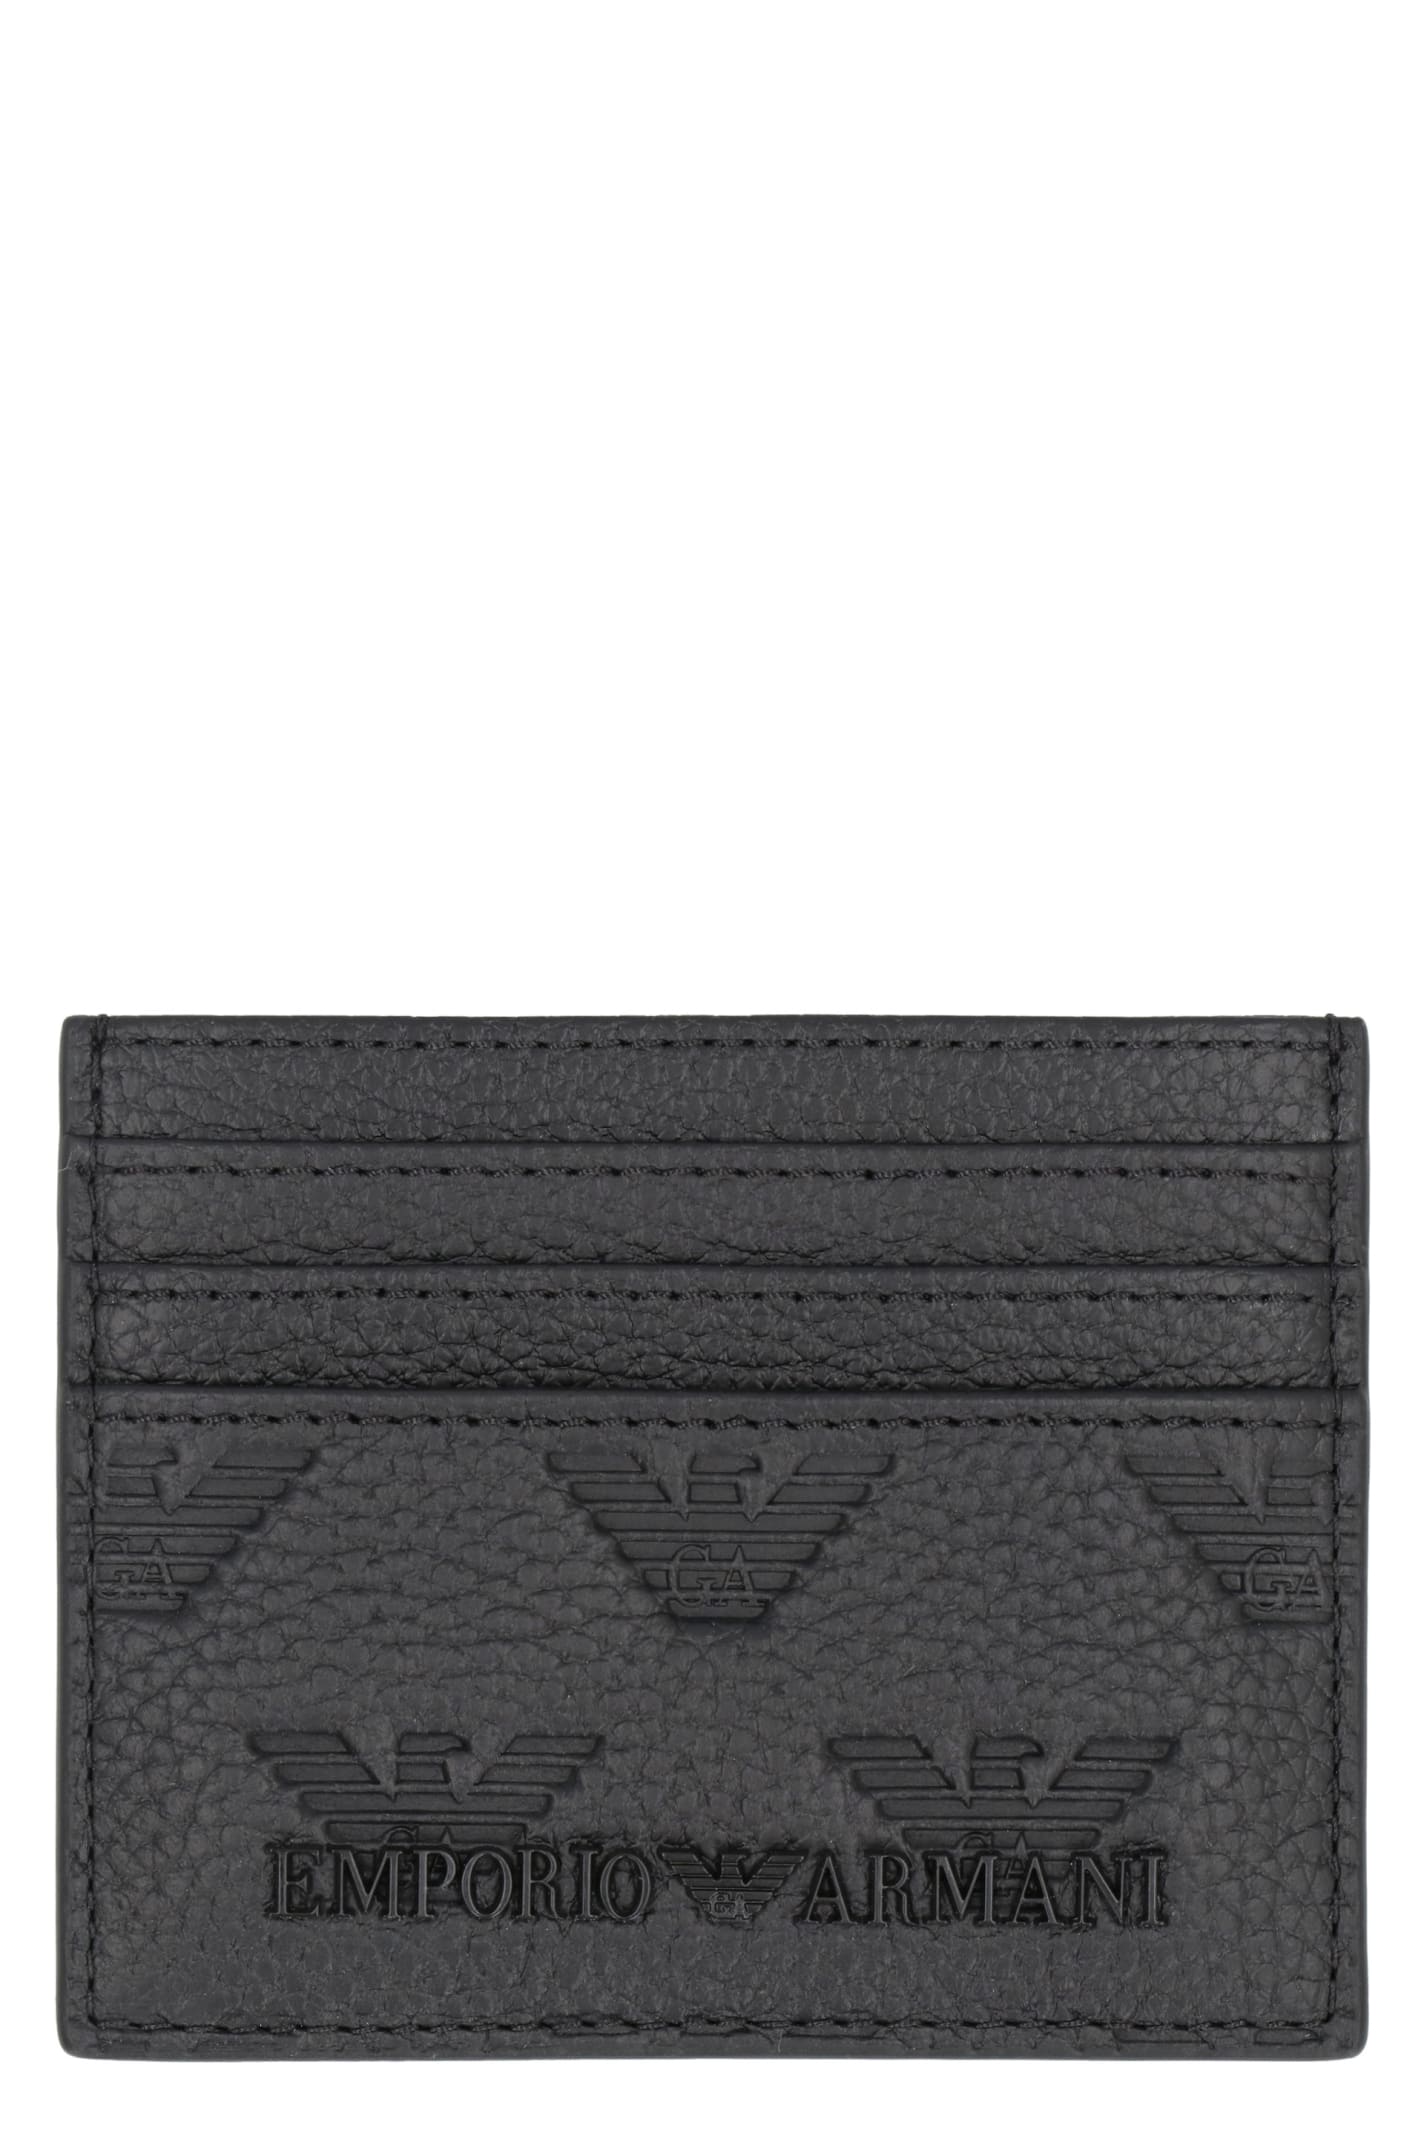 Emporio Armani Leather Card Holder In Black